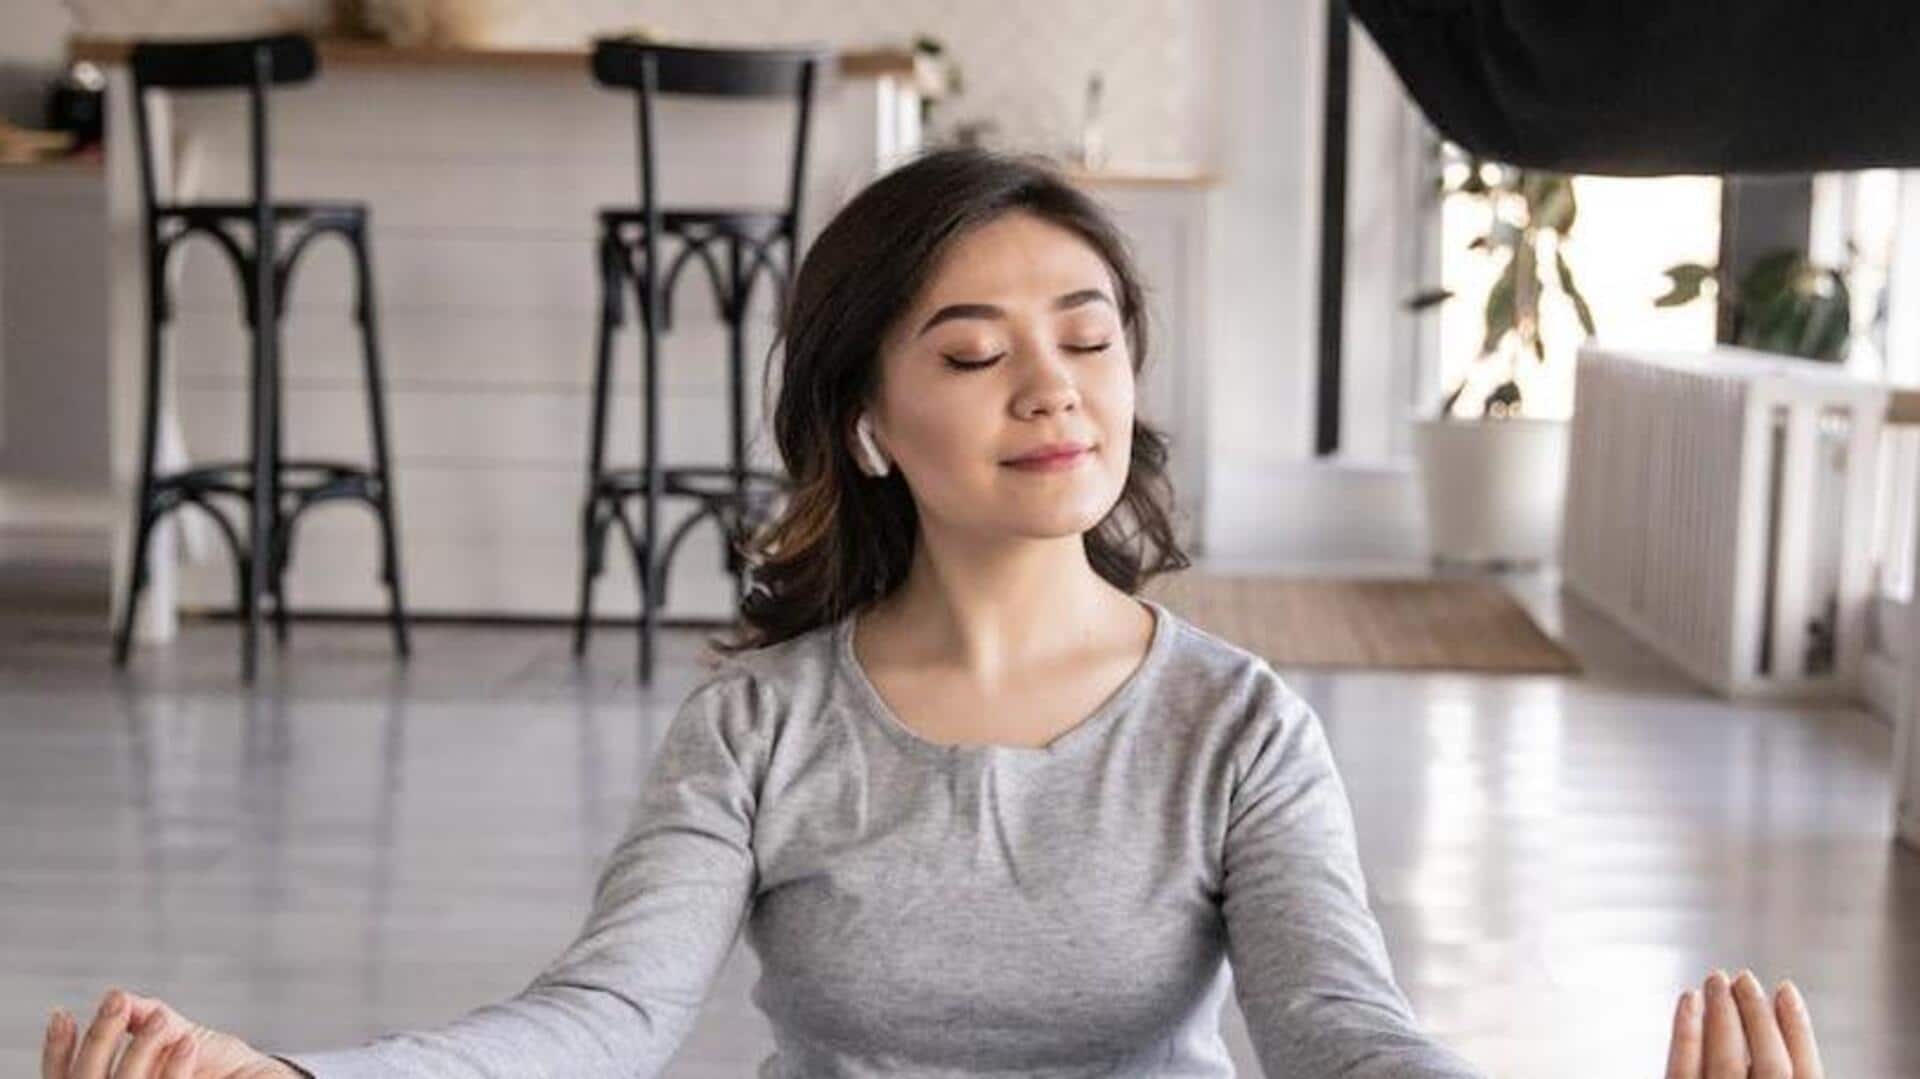 5 amazing benefits of listening to music while meditating